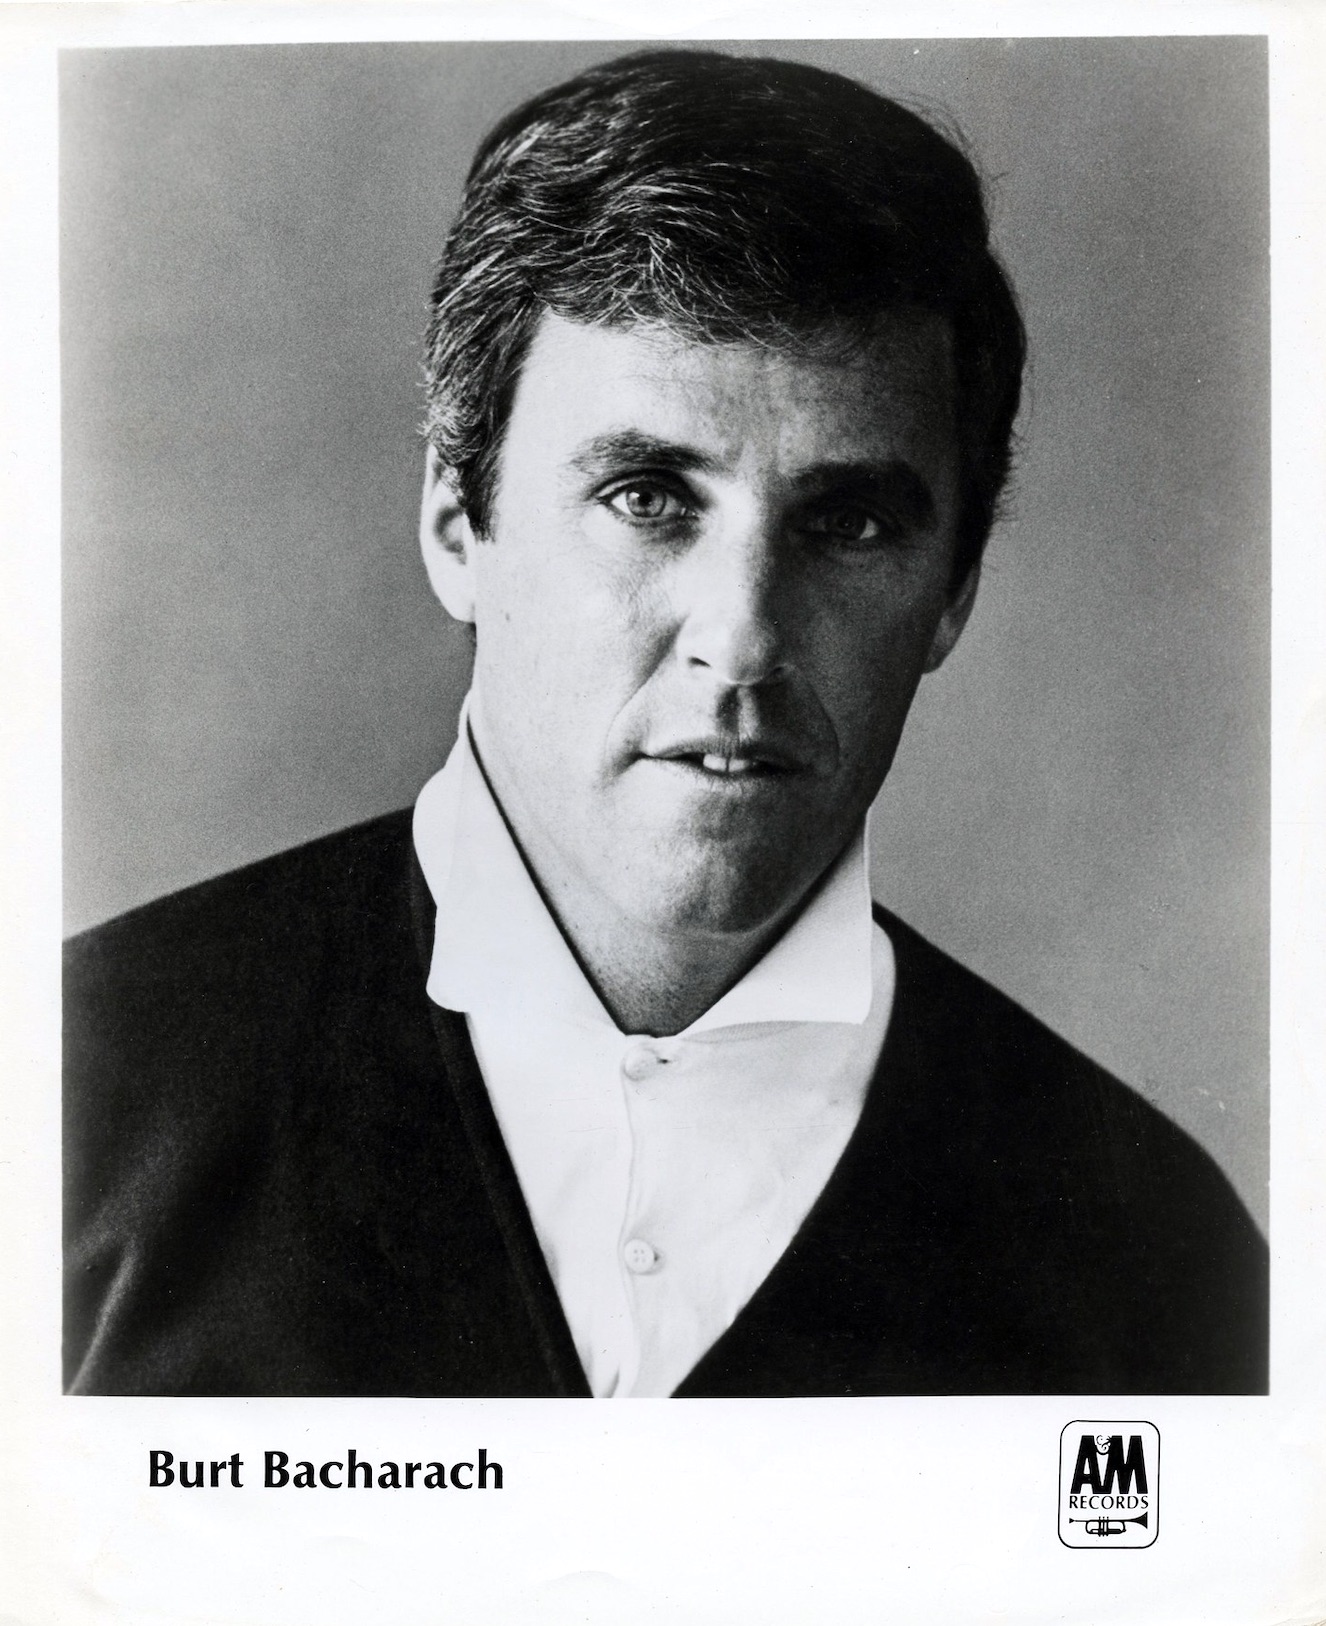 Burt Bacharach | On Au0026M Records